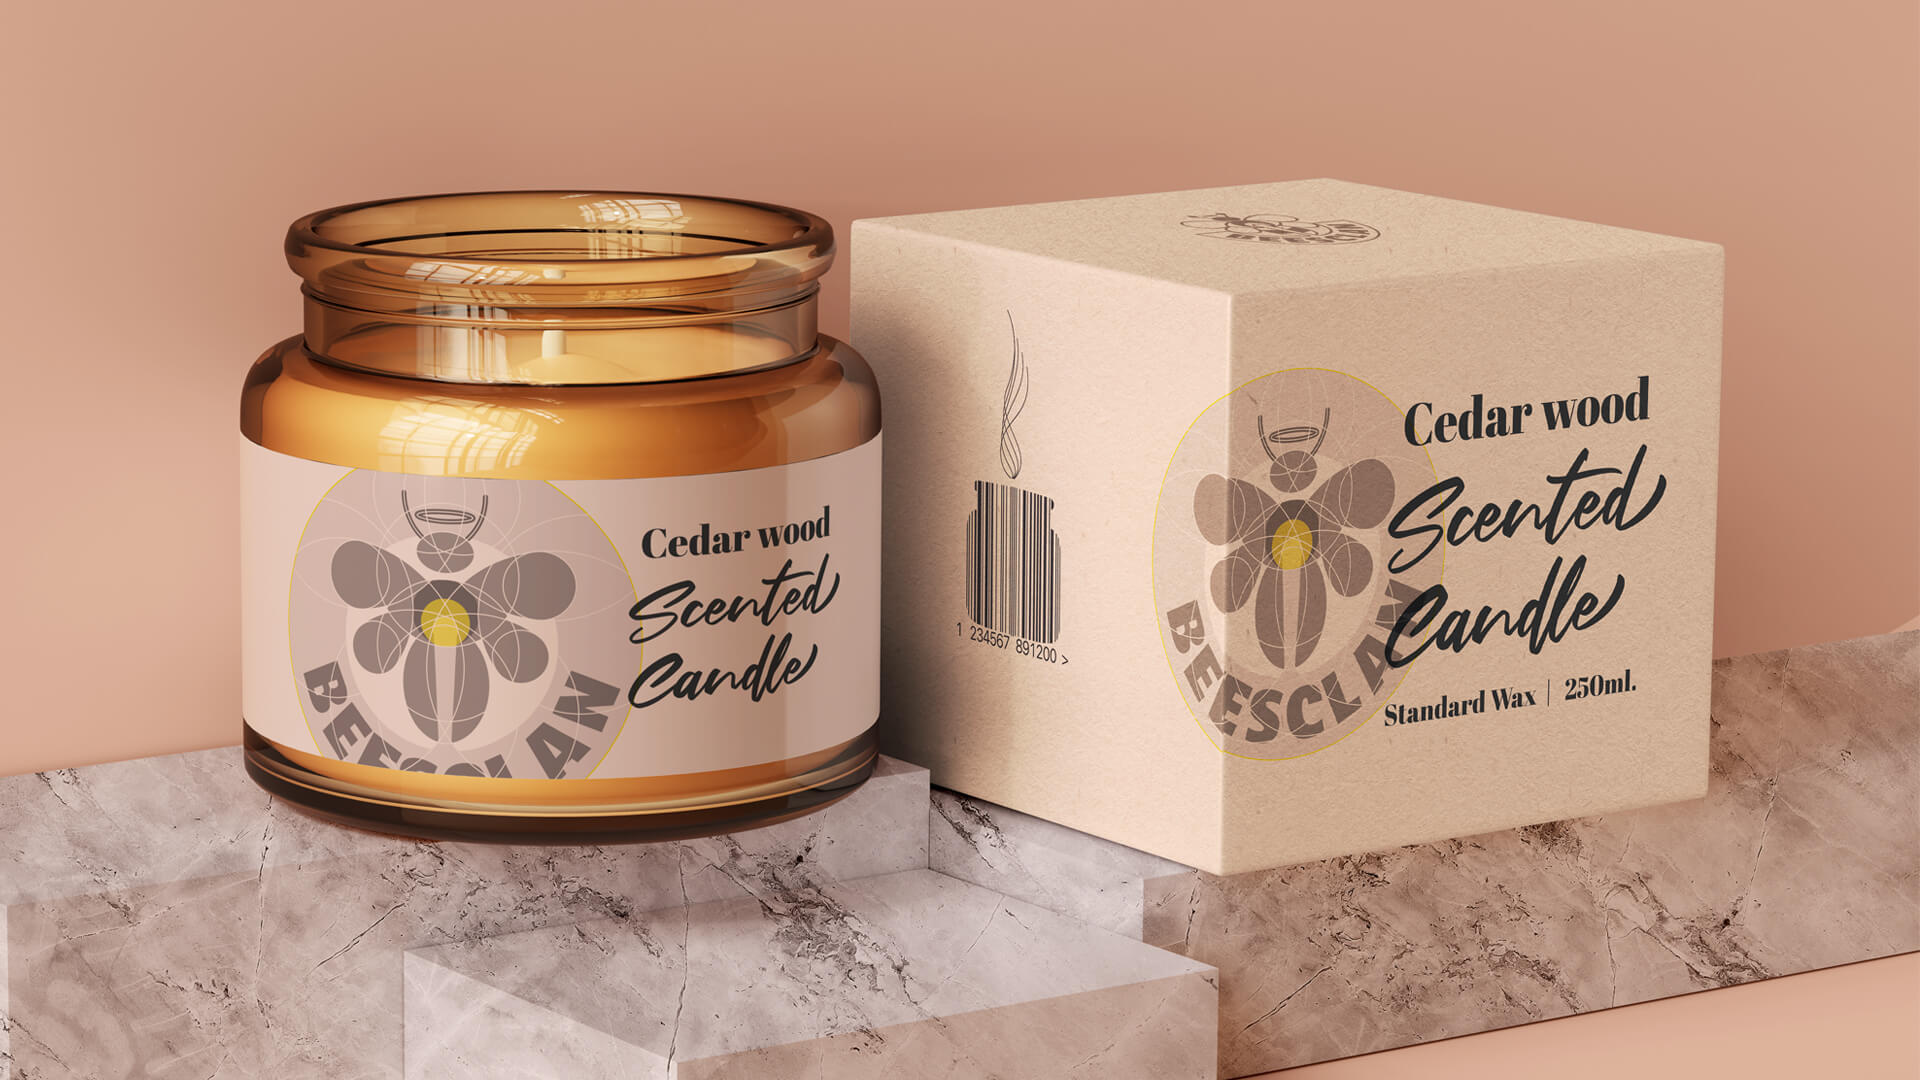 Beesclan bee's clan cedar wood scented candle standard wax 250ml